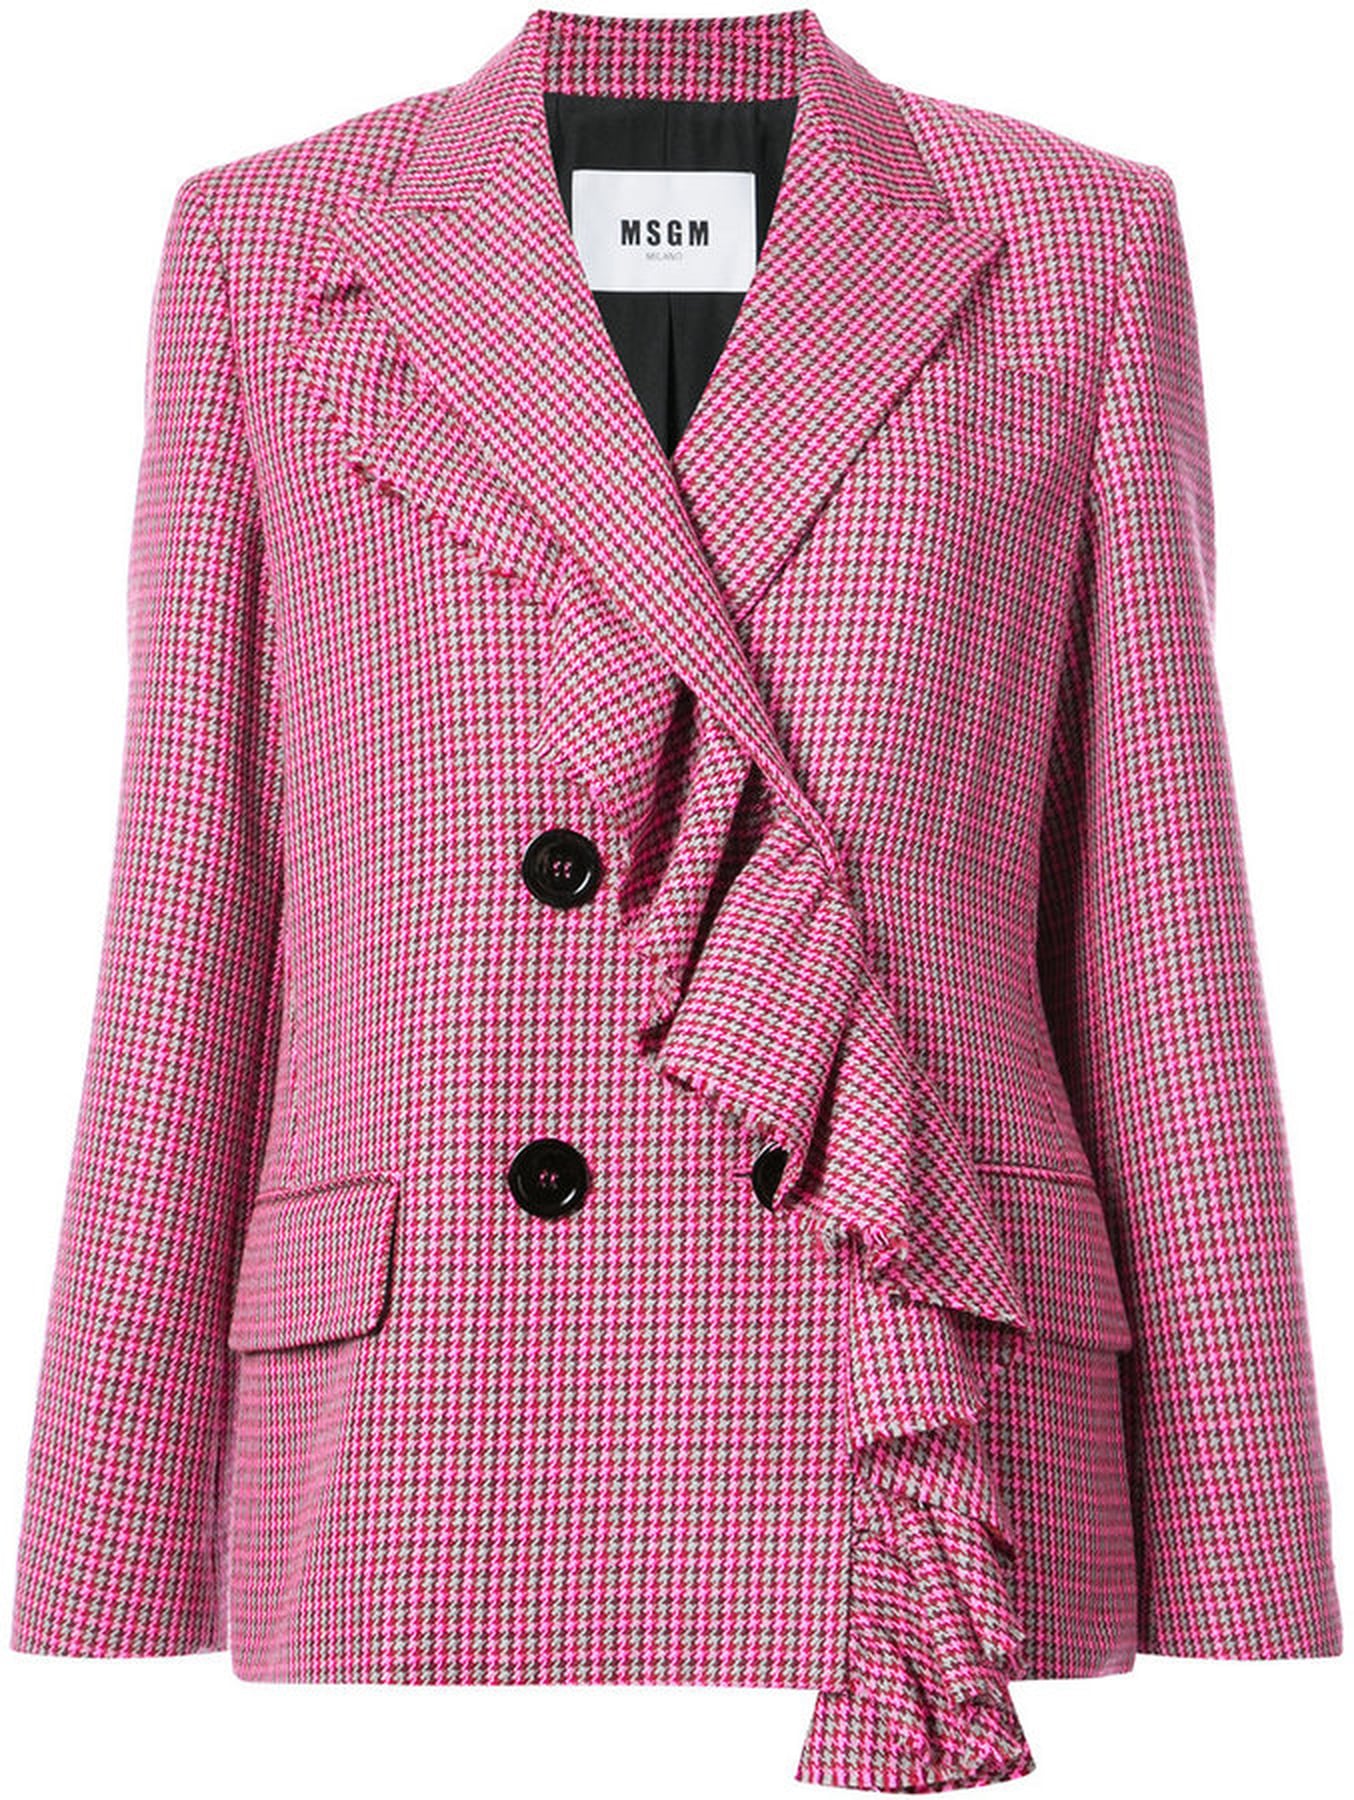 Gigi Hadid Pink Fendi Suit | POPSUGAR Fashion